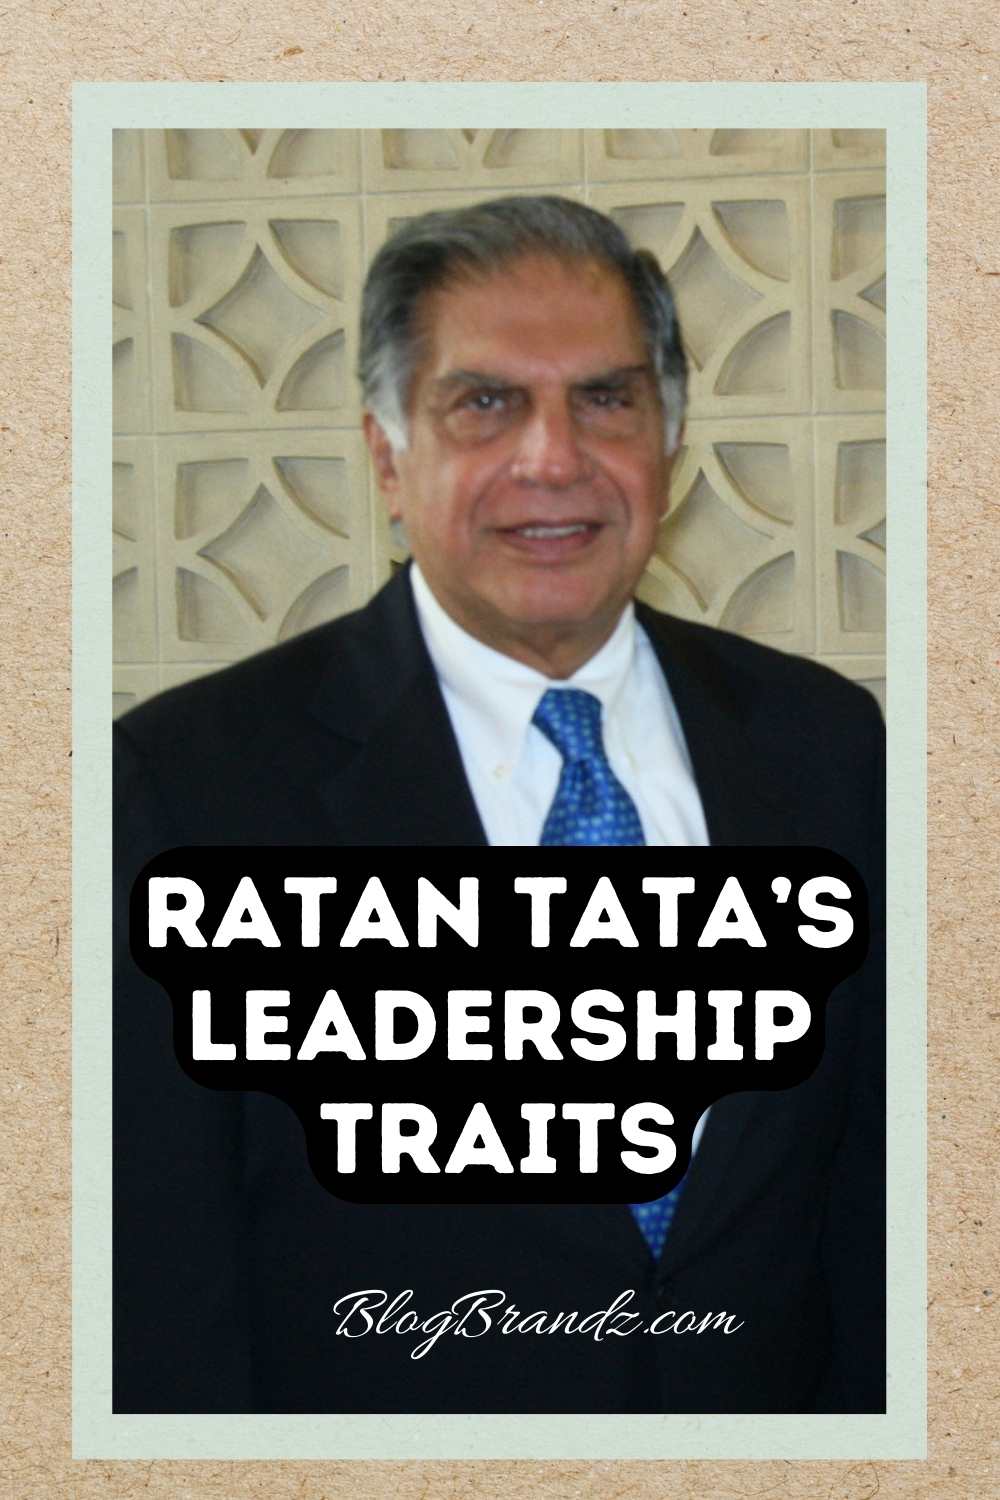 About Ratan Tata’s Leadership Traits